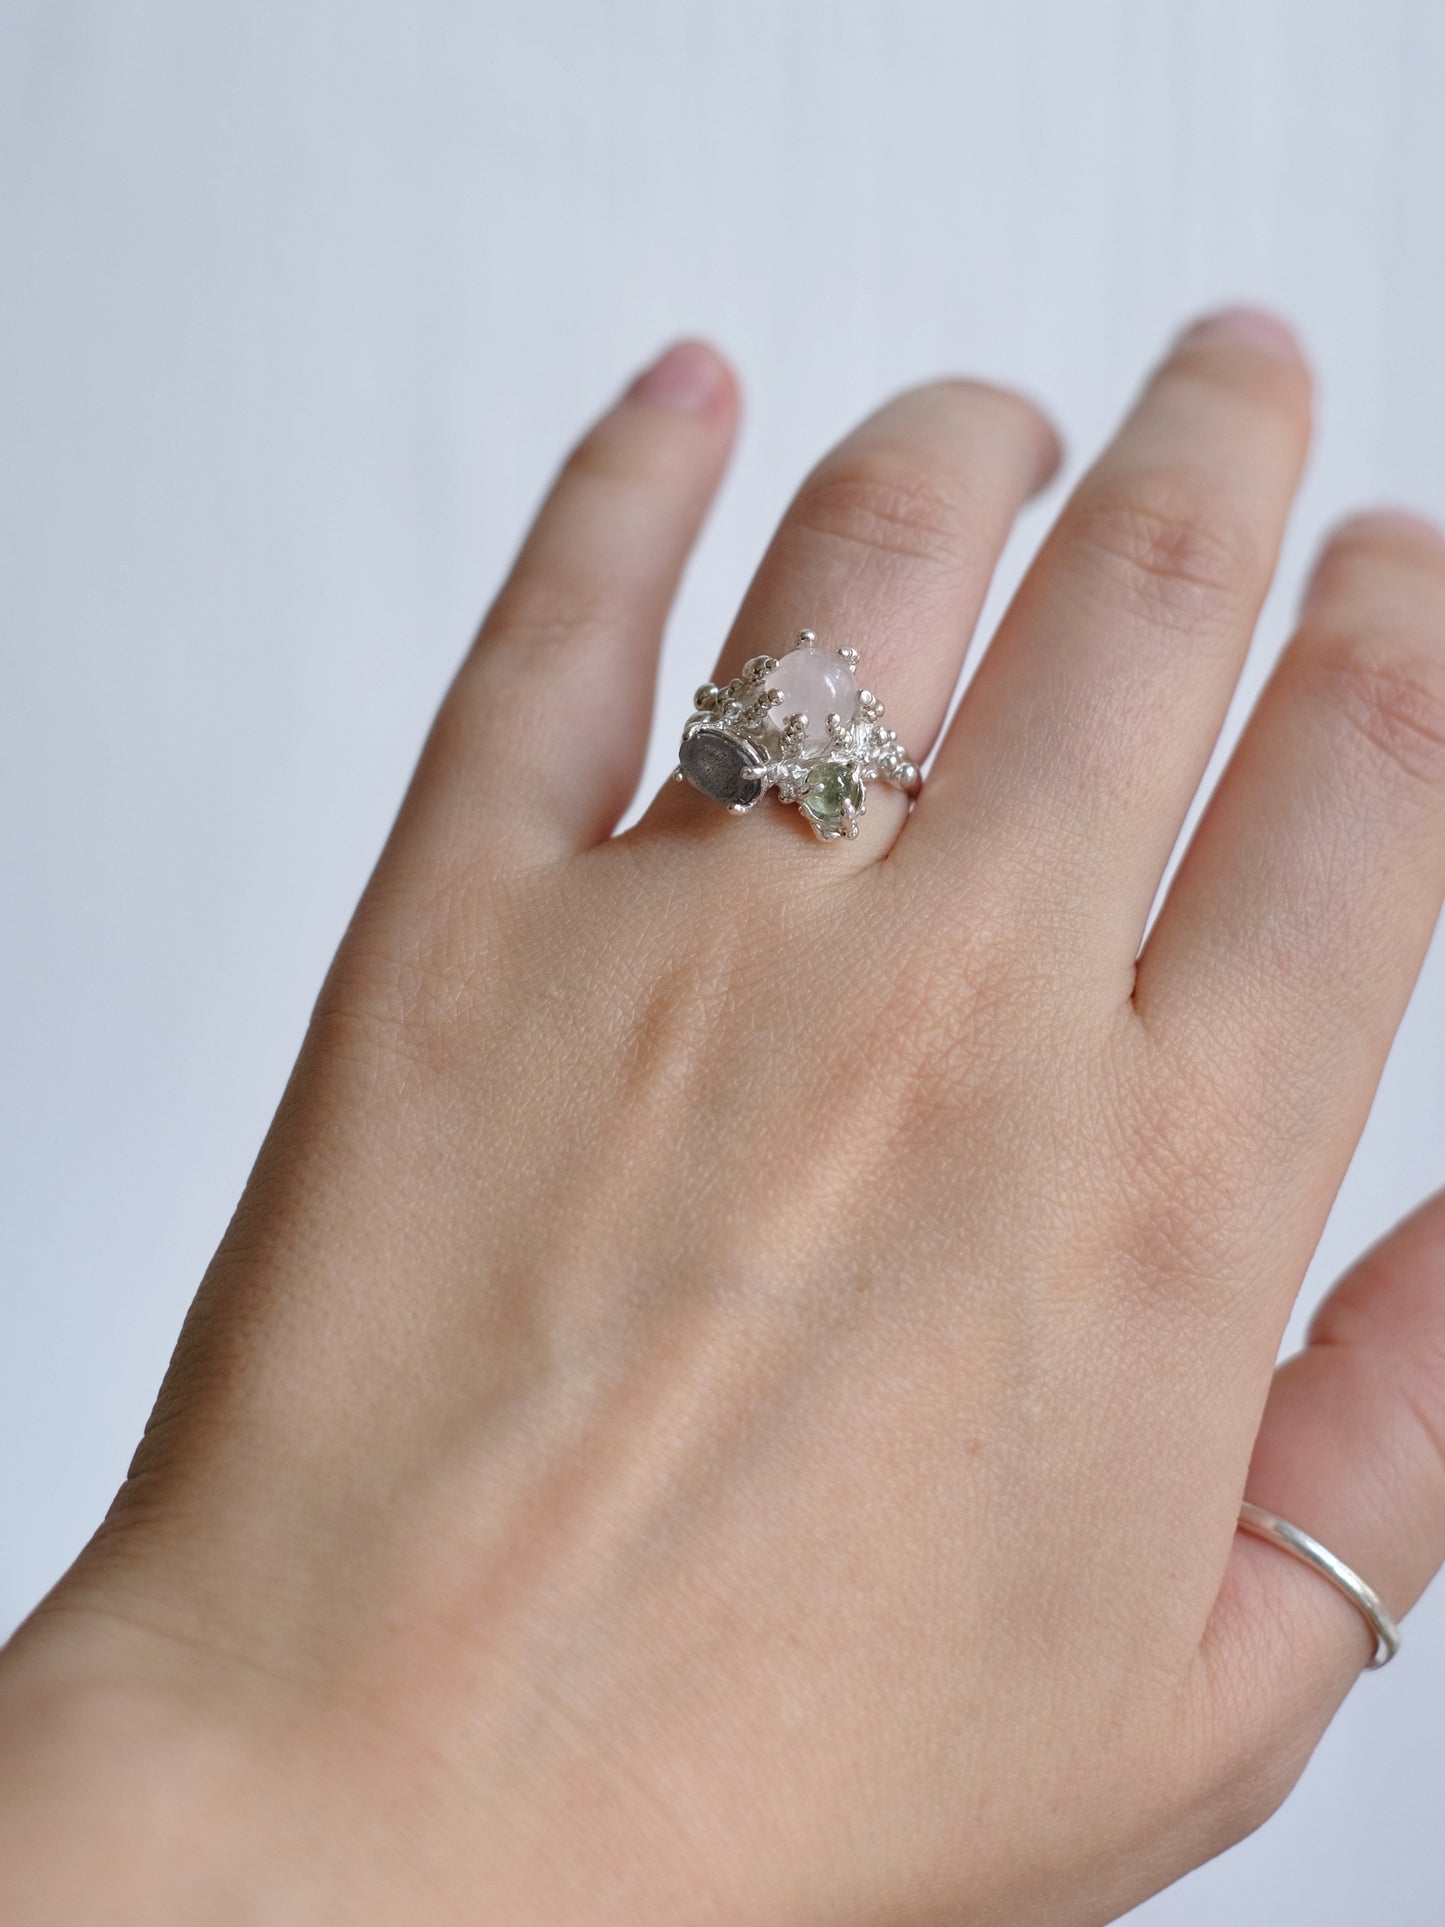 Ring with "Rose quartz, labradorite and peridot"